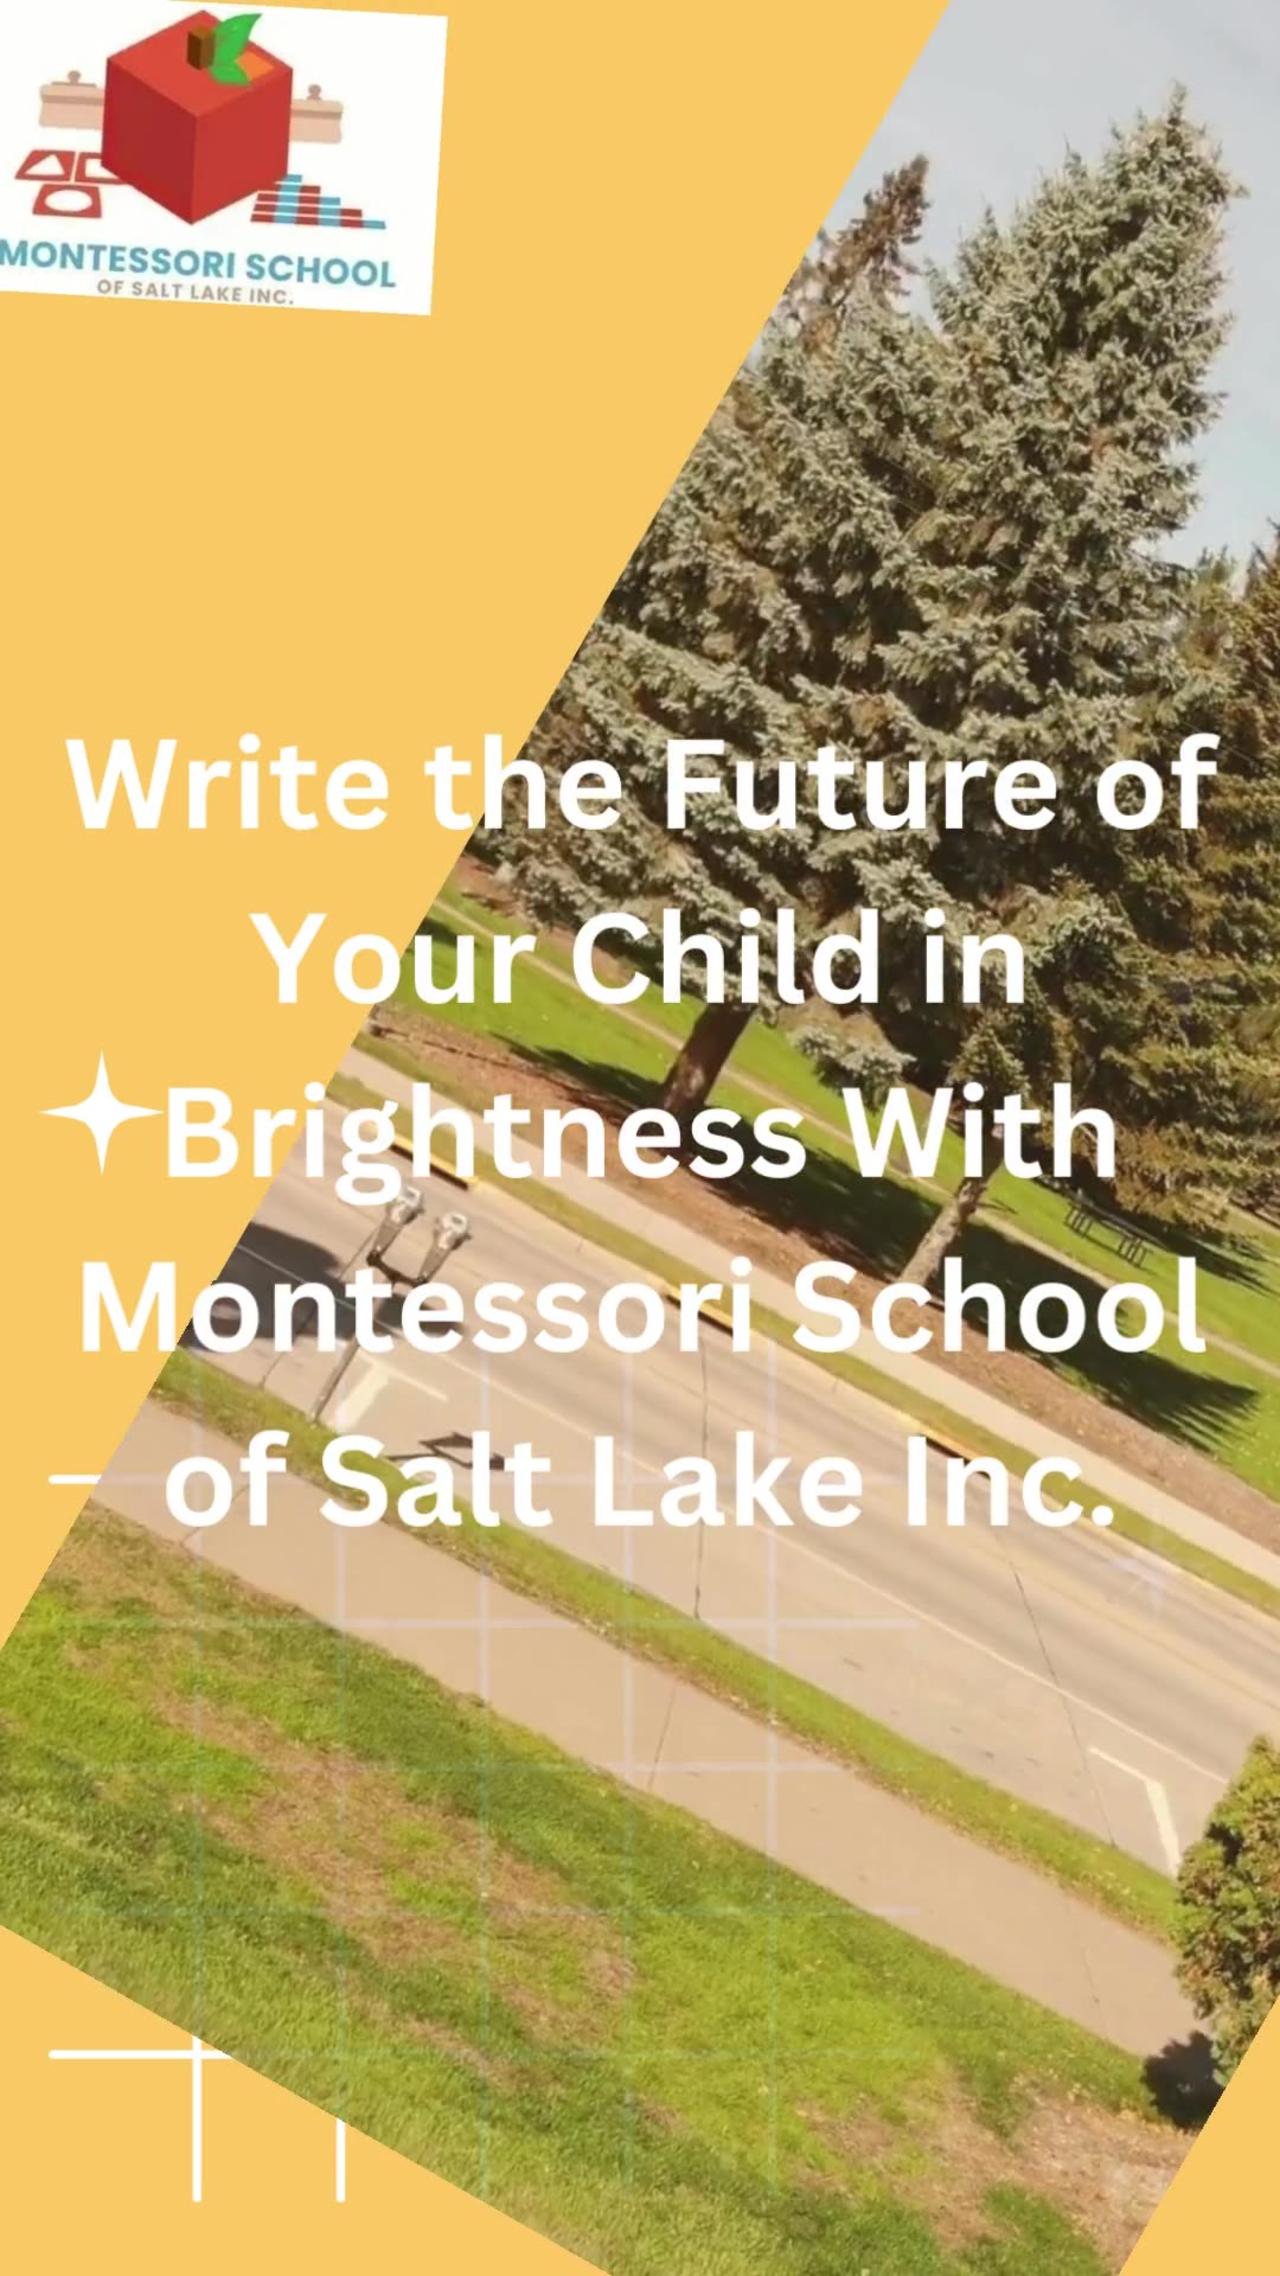 Write the Future of your child in brightness with Montessori School of Salt Lake Inc.